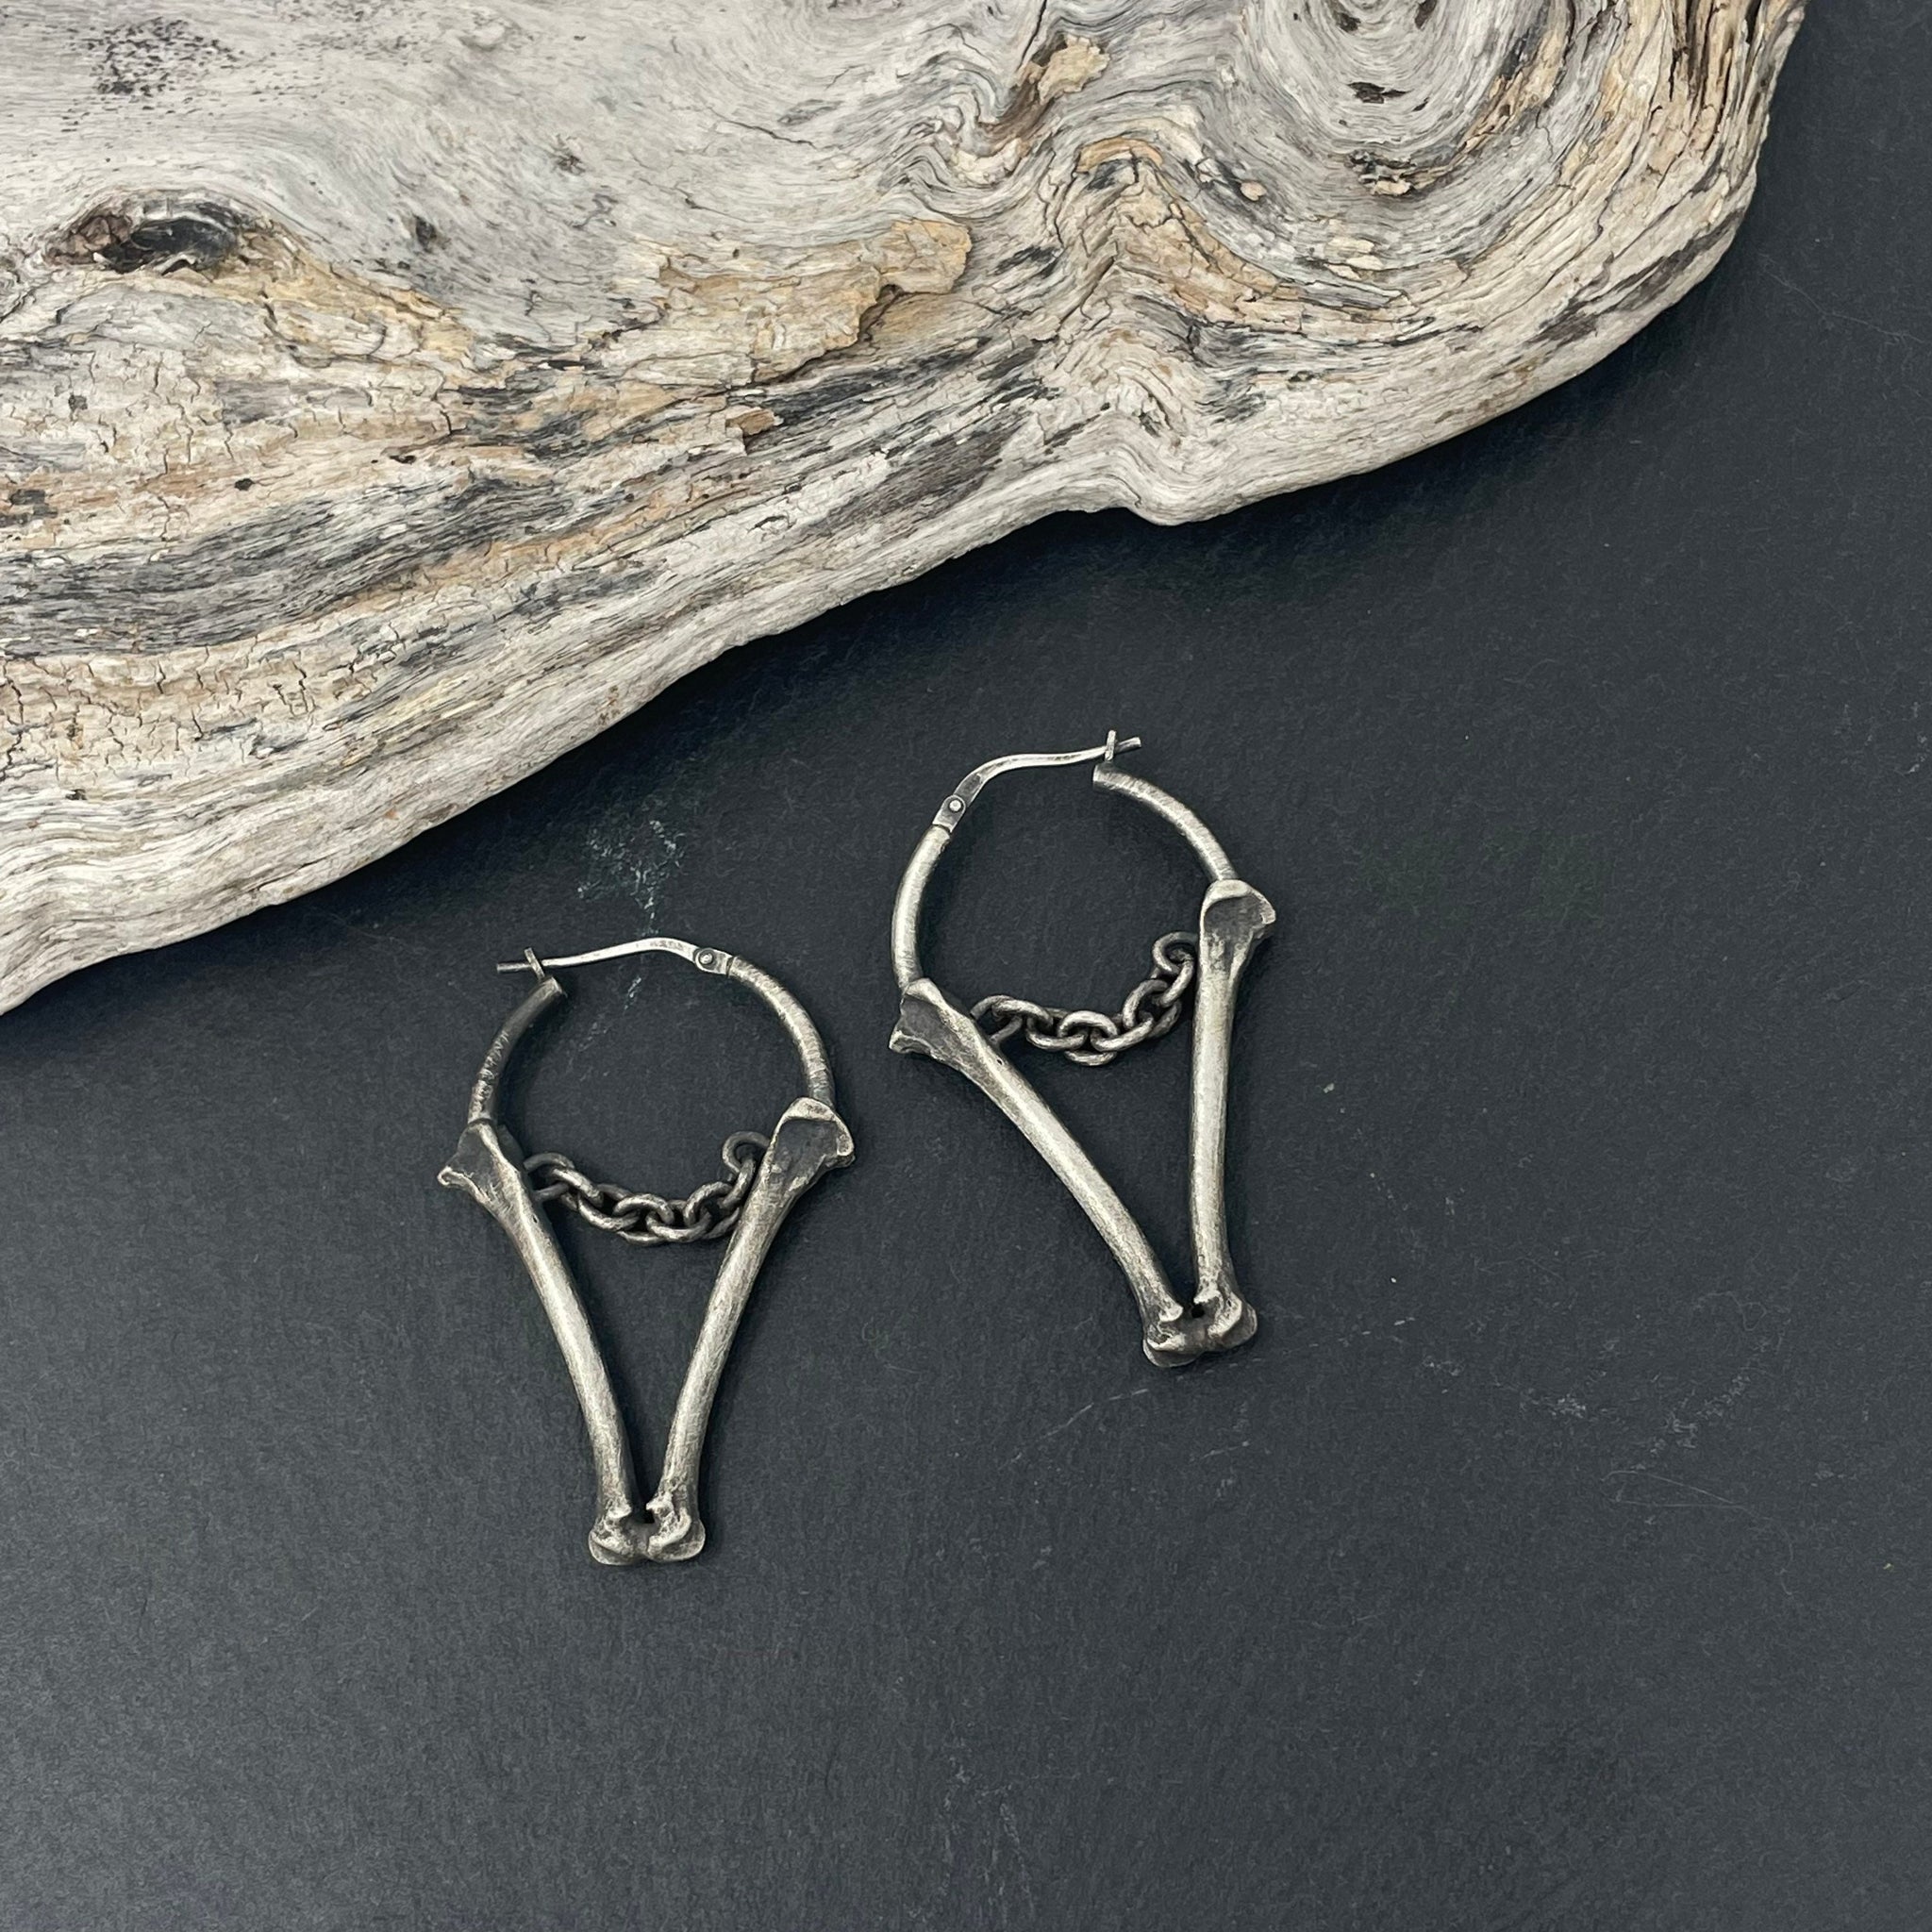 Bones and Chains earrings - ear weigths